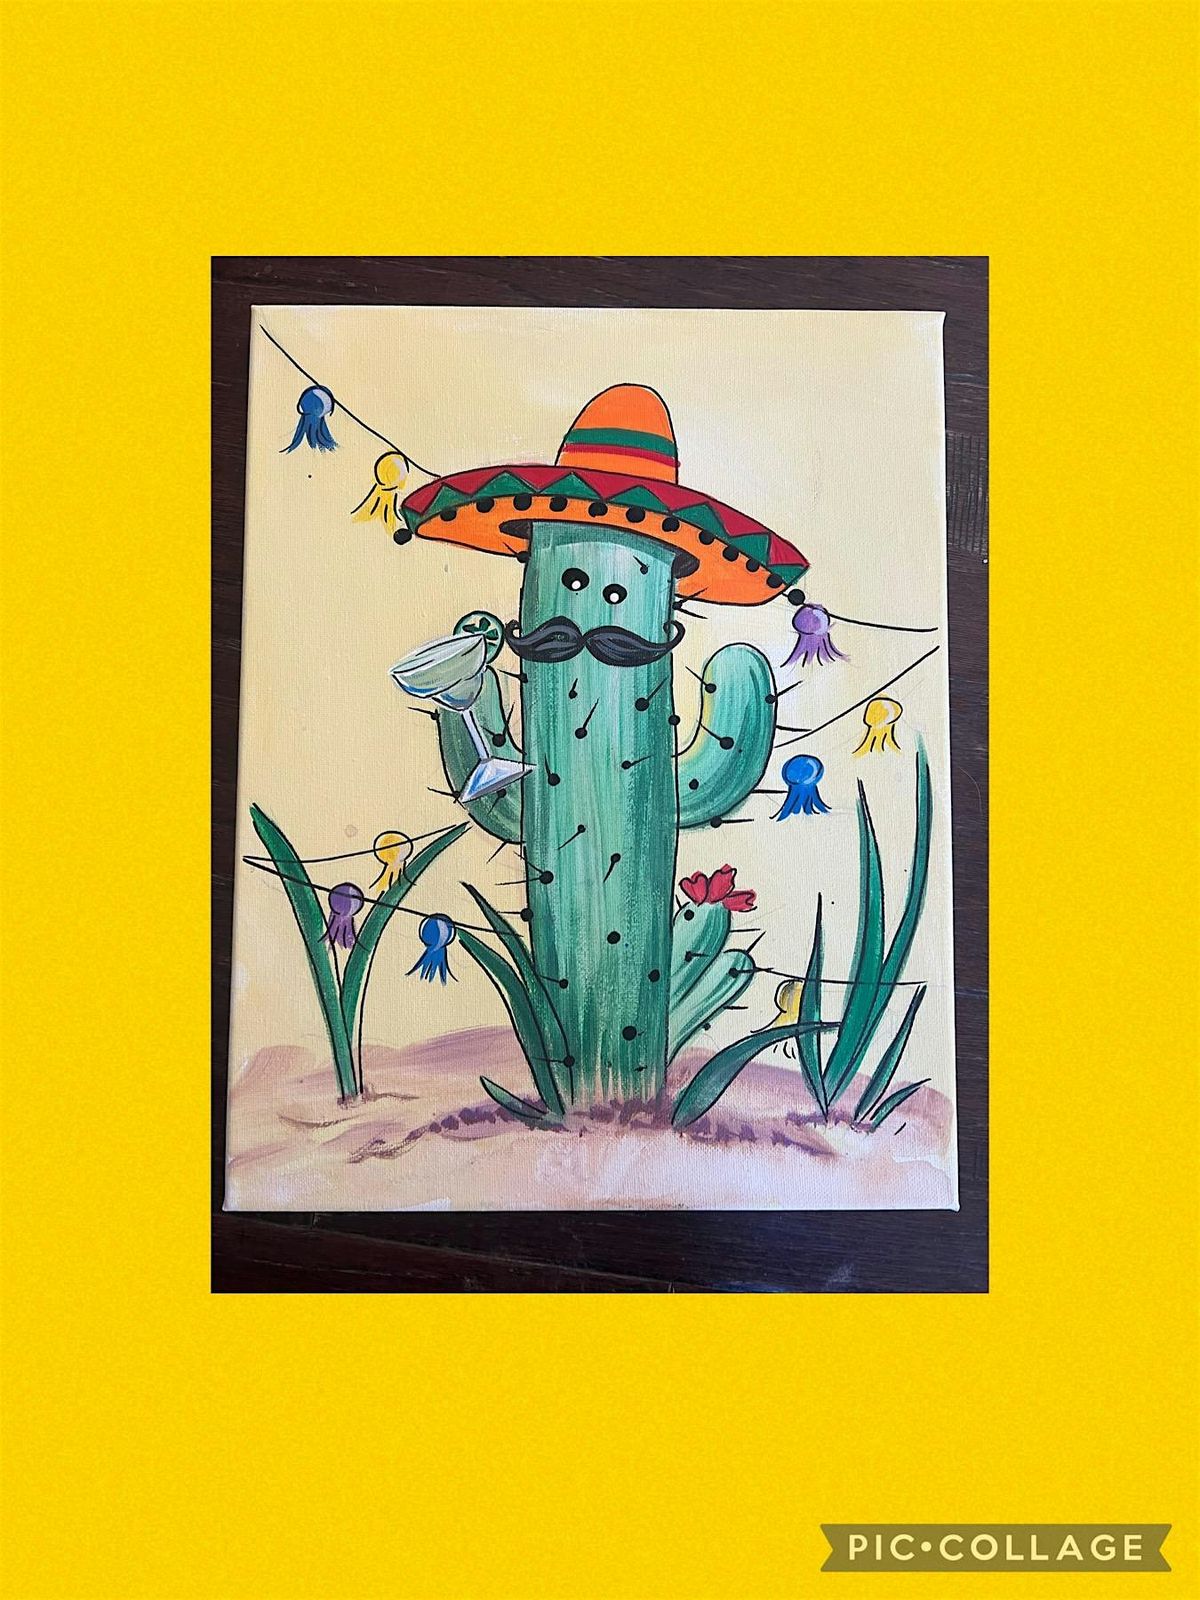 Happy Cacti Painting Class